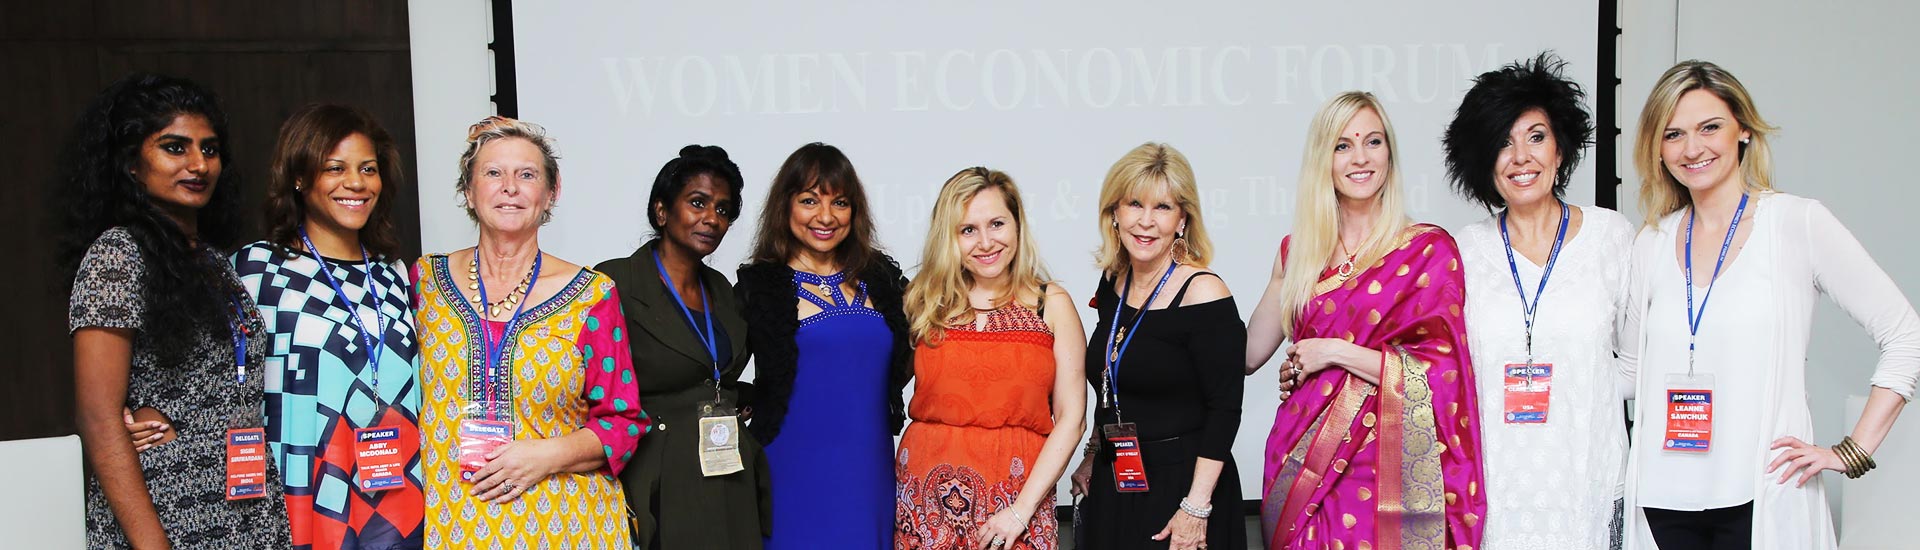 Womens Economic Forum Convention 2016